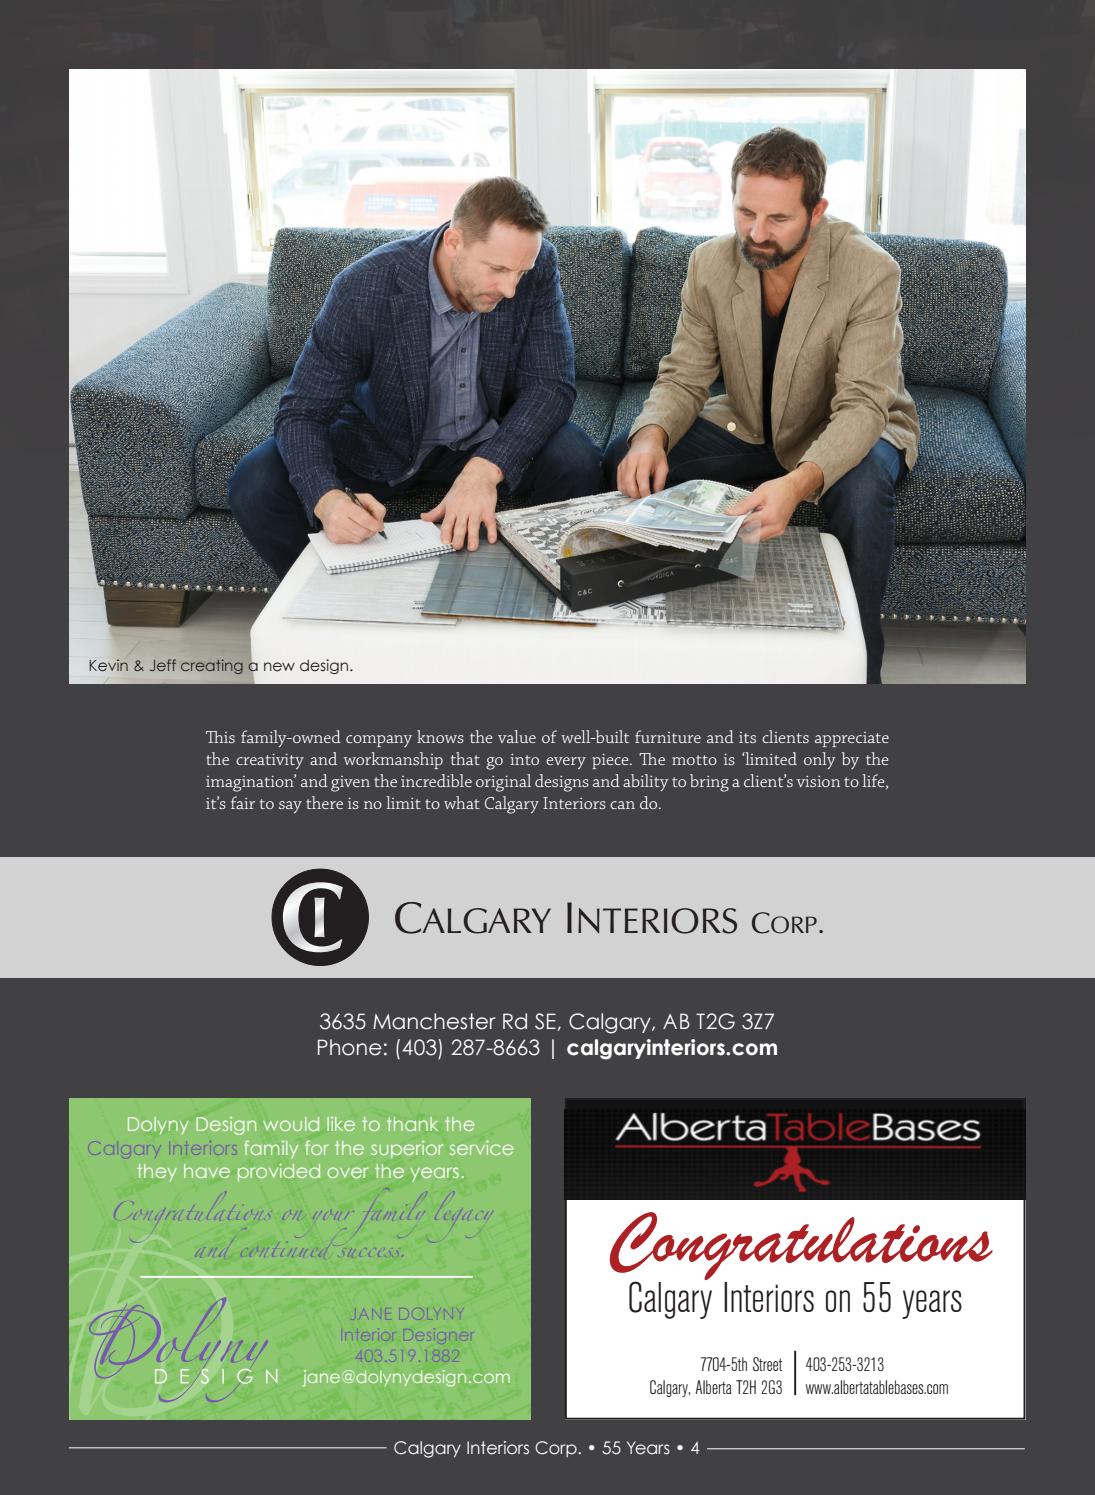 Business in Calgary Magazine - Business Profile for Calgary Interiors